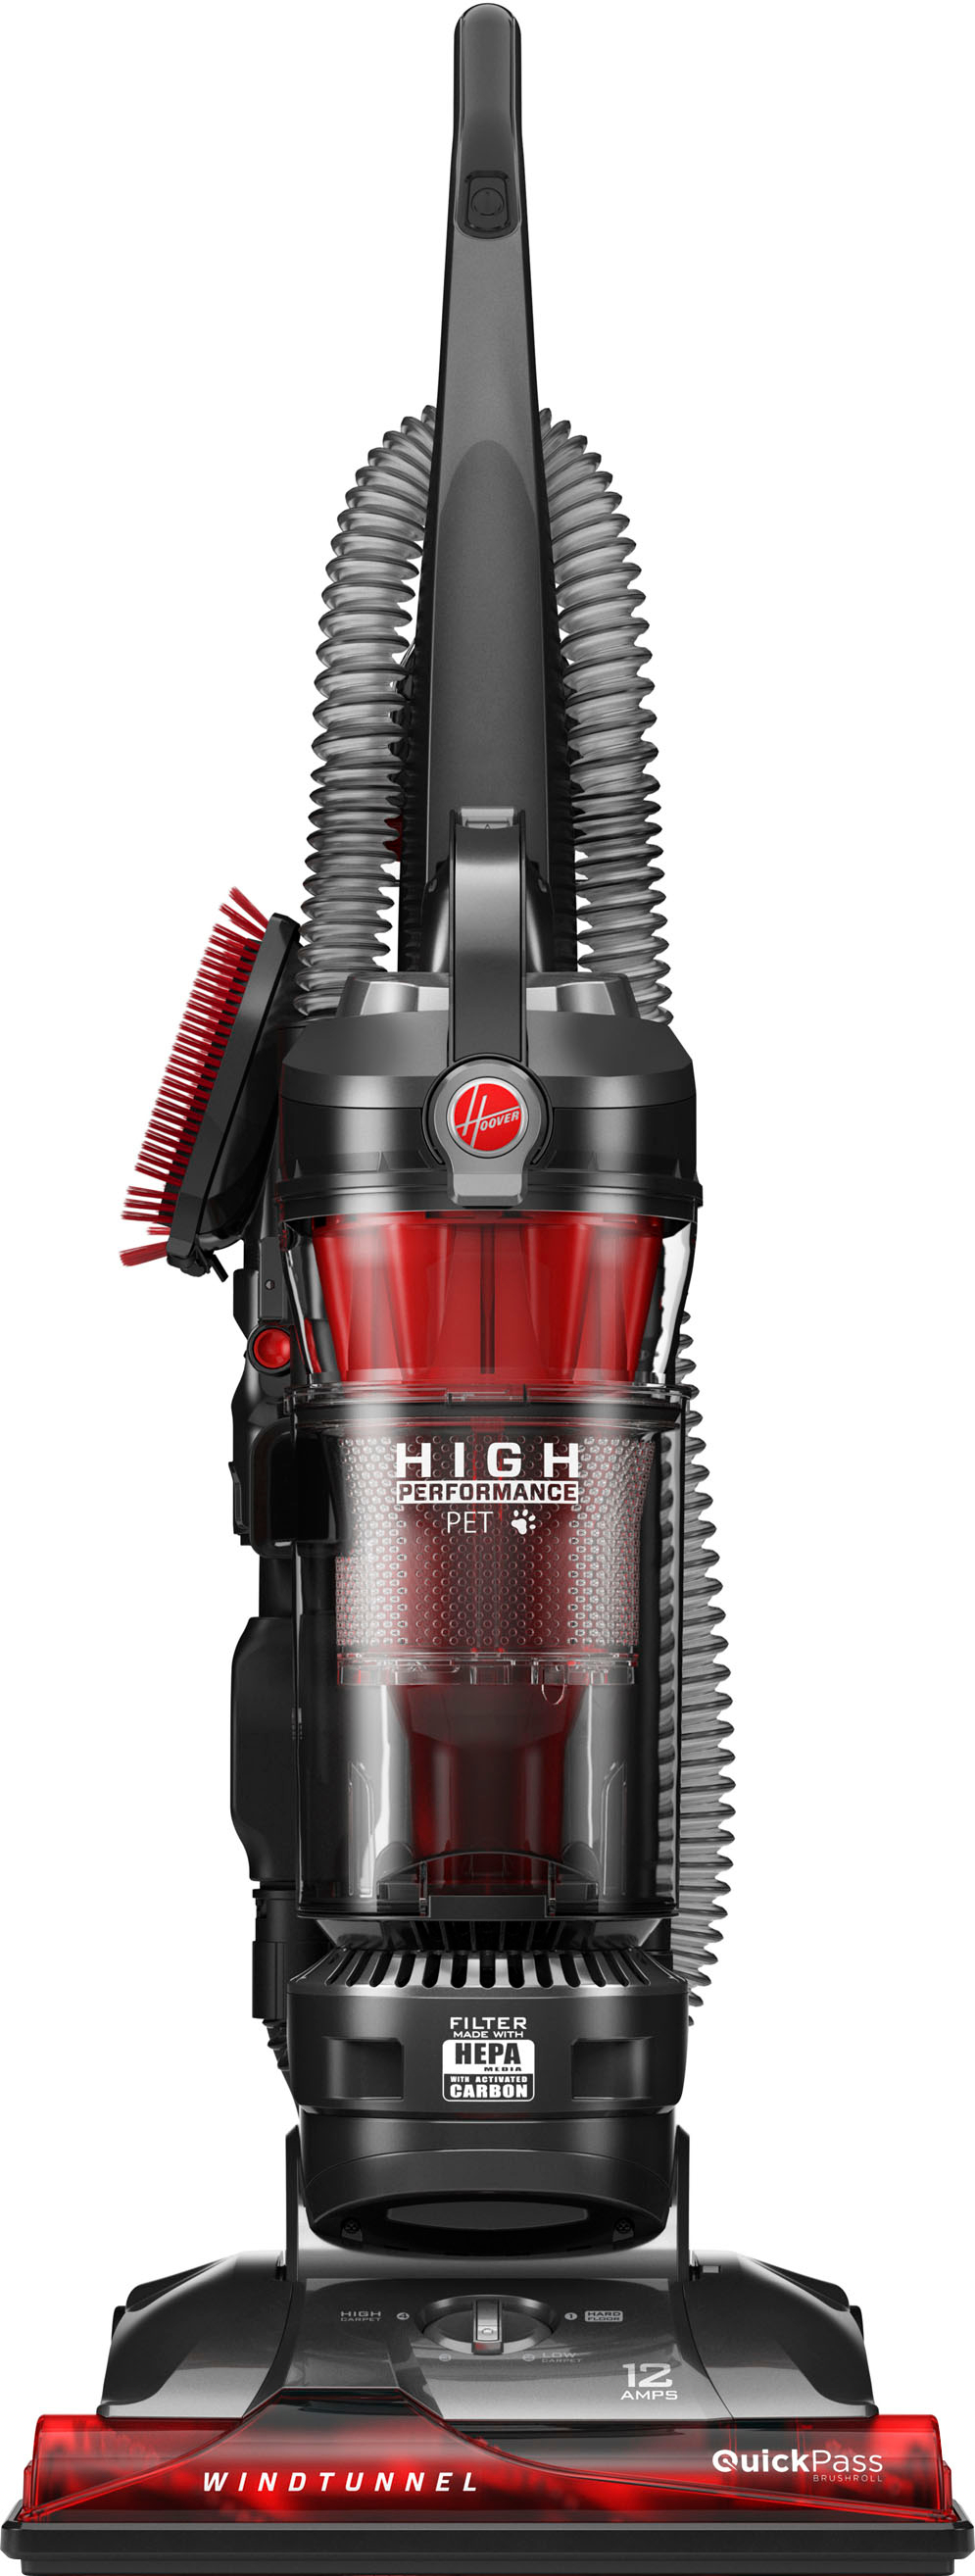 New Hoover Vacuum Hepa Final Filter